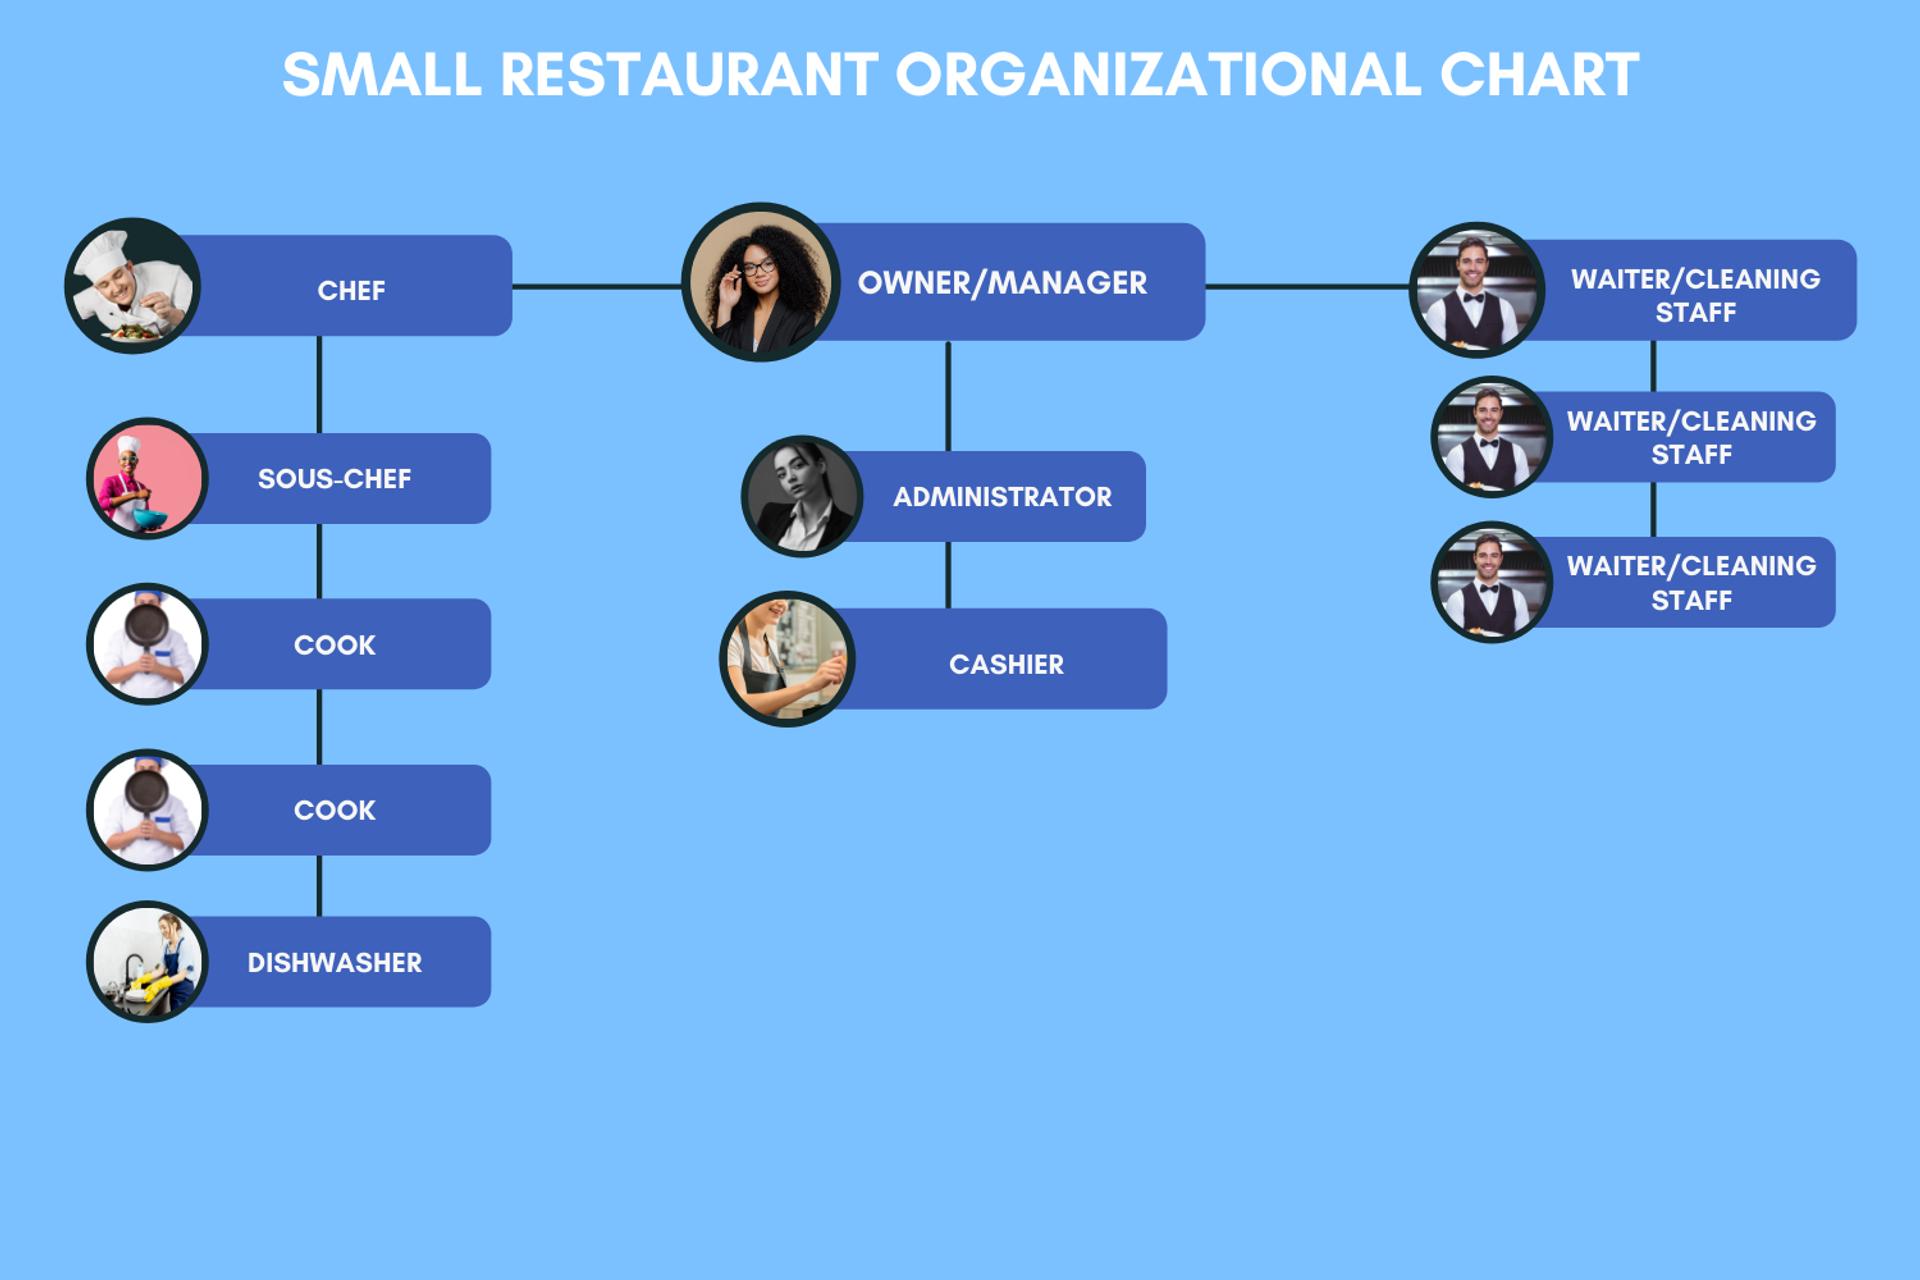 Organizational chart for small restaurant